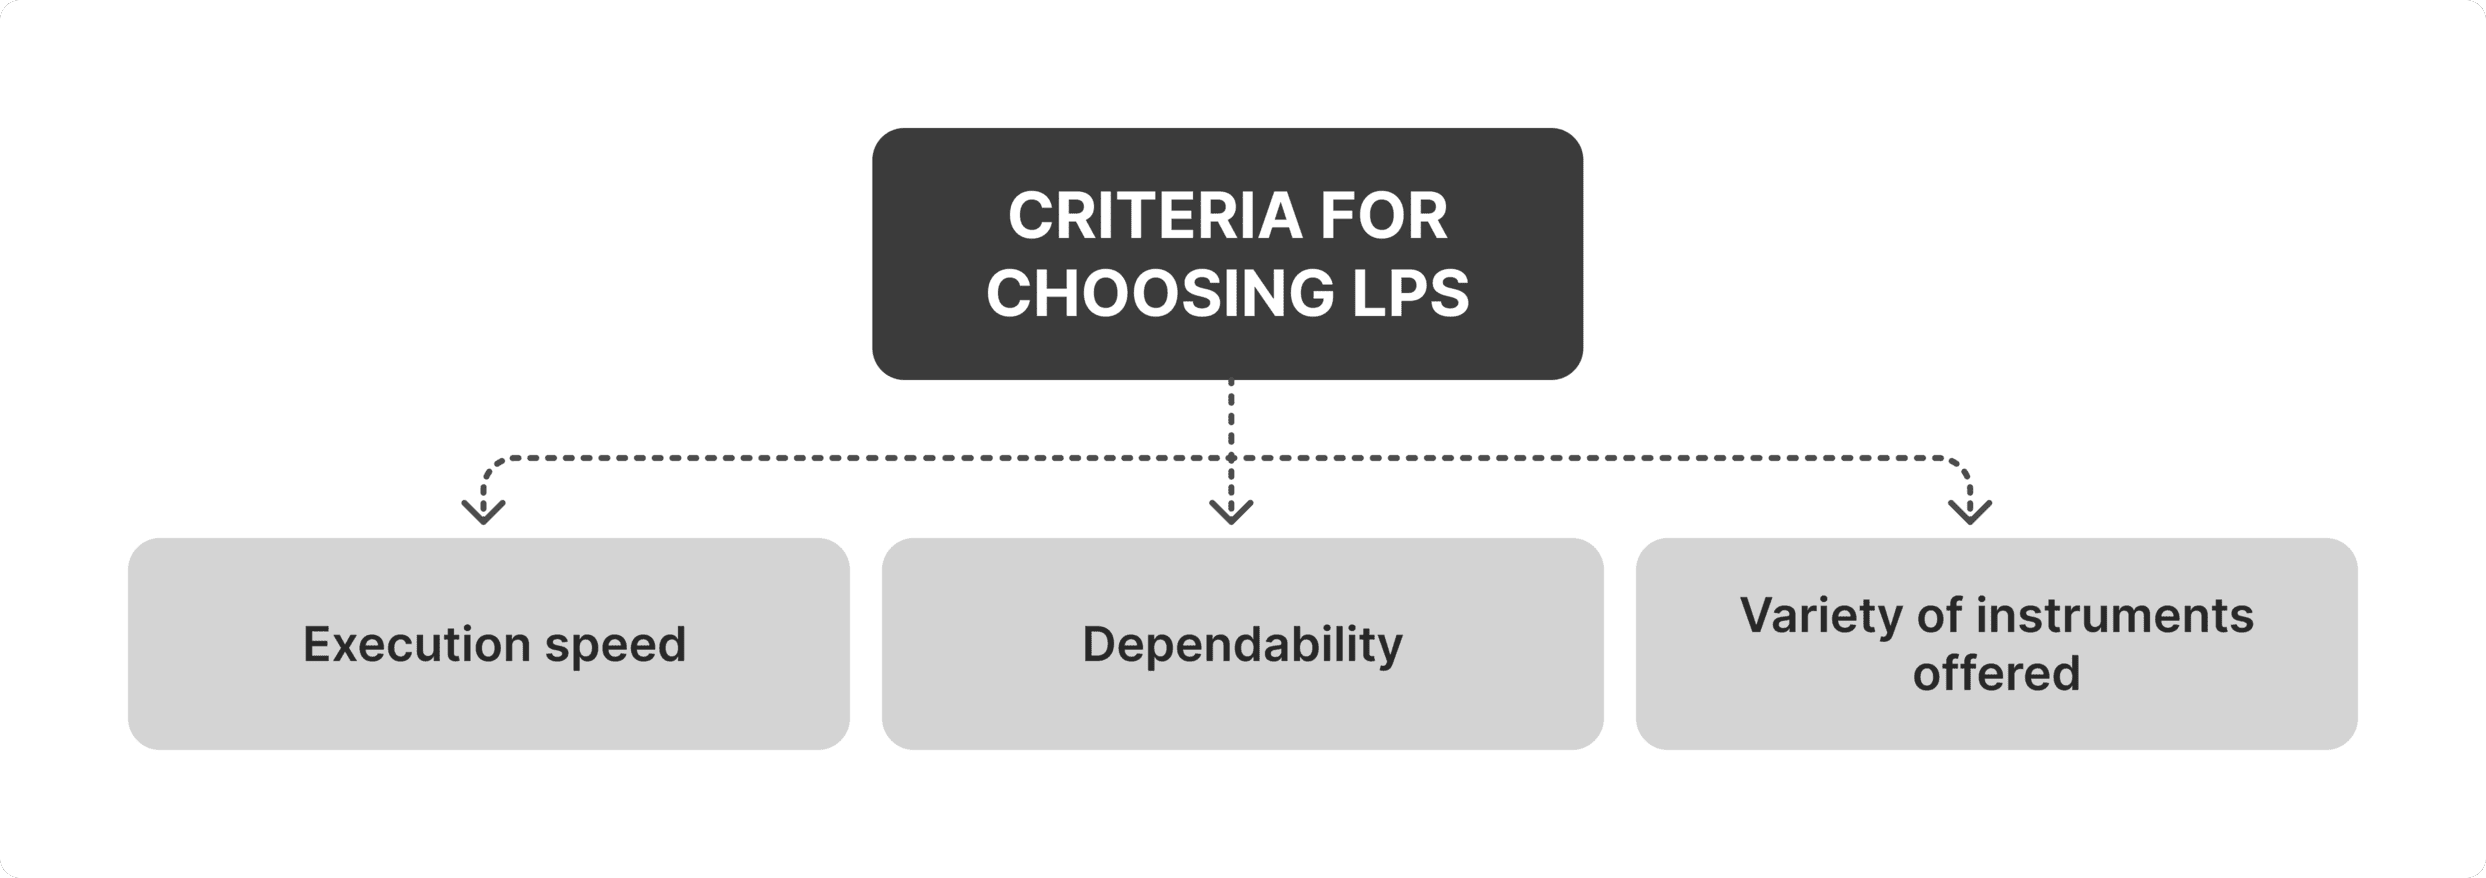 criteria for choosing lps